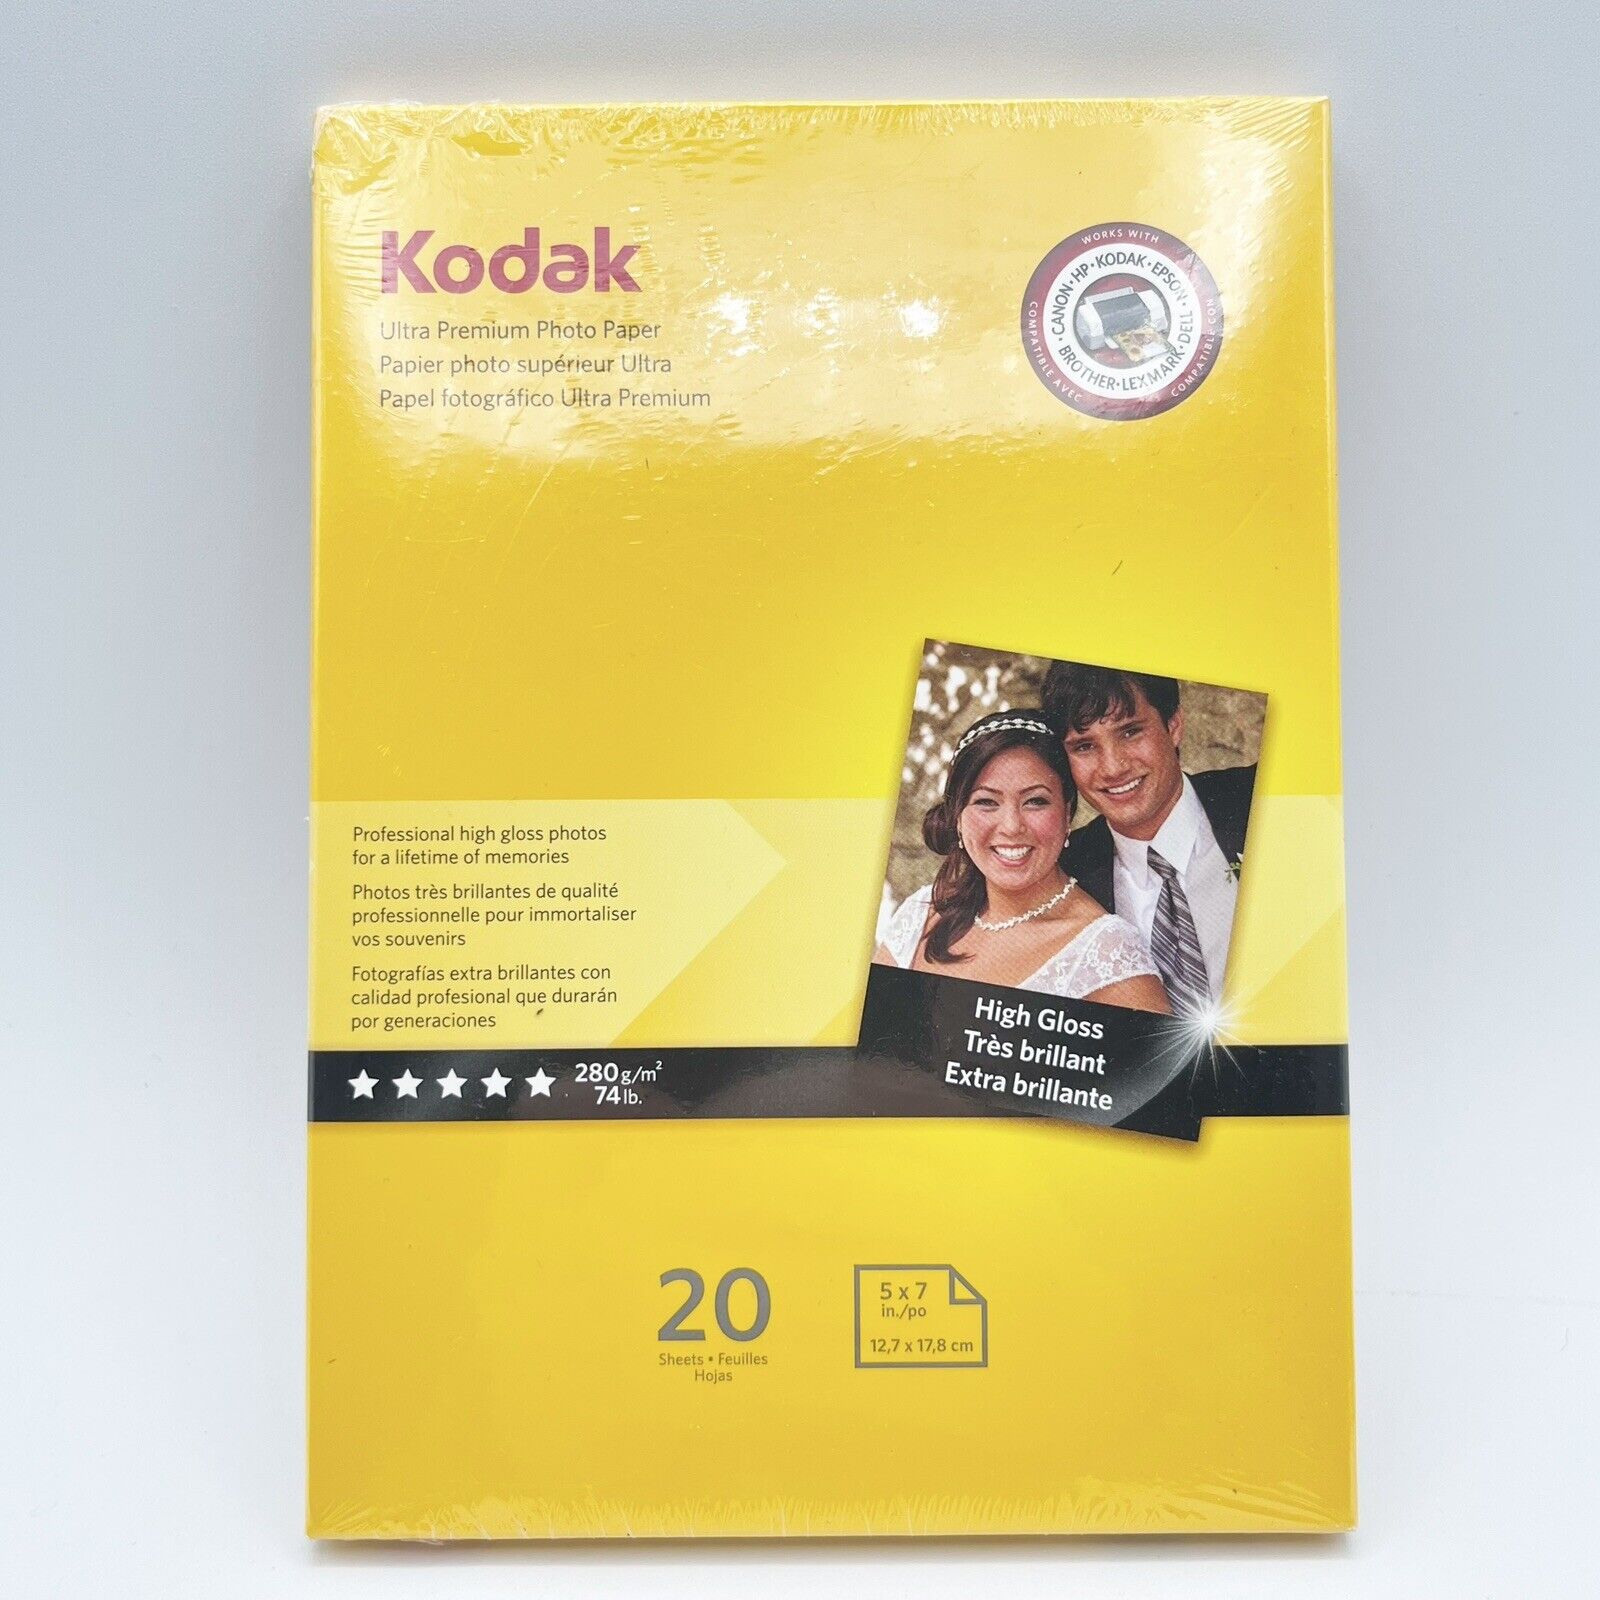 NEW Kodak Ultra Premium Photo Paper 5x7 High Gloss 20 Sheets SEALED 1801711 